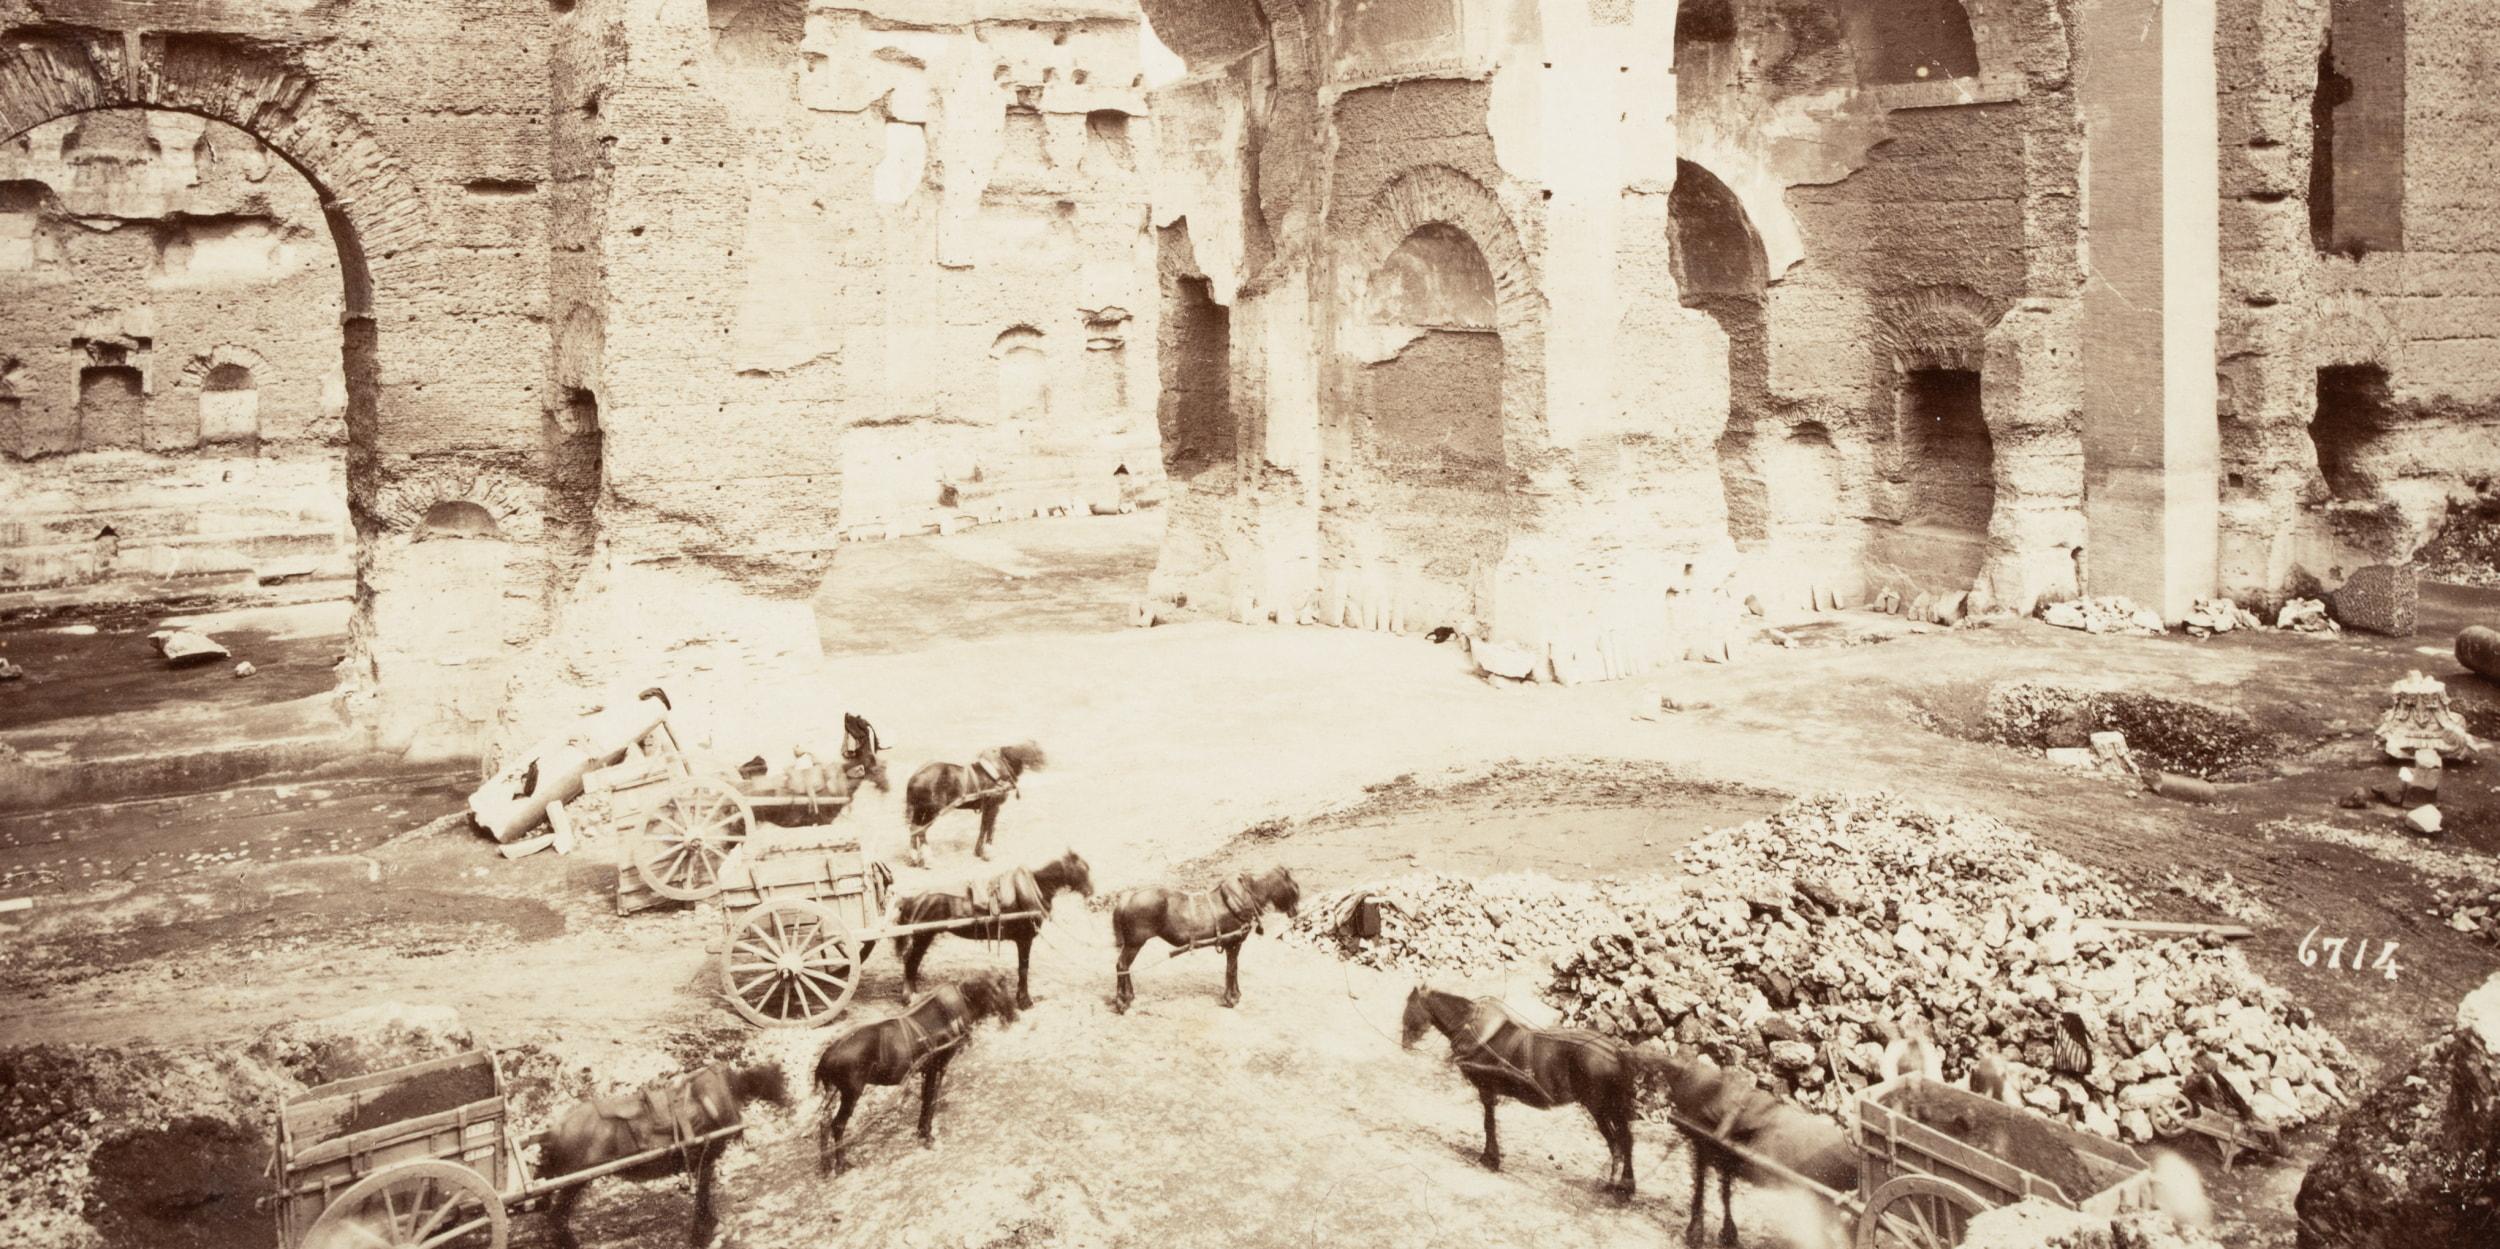 Baths of Caracalla, Rome - Photograph by Fratelli Alinari